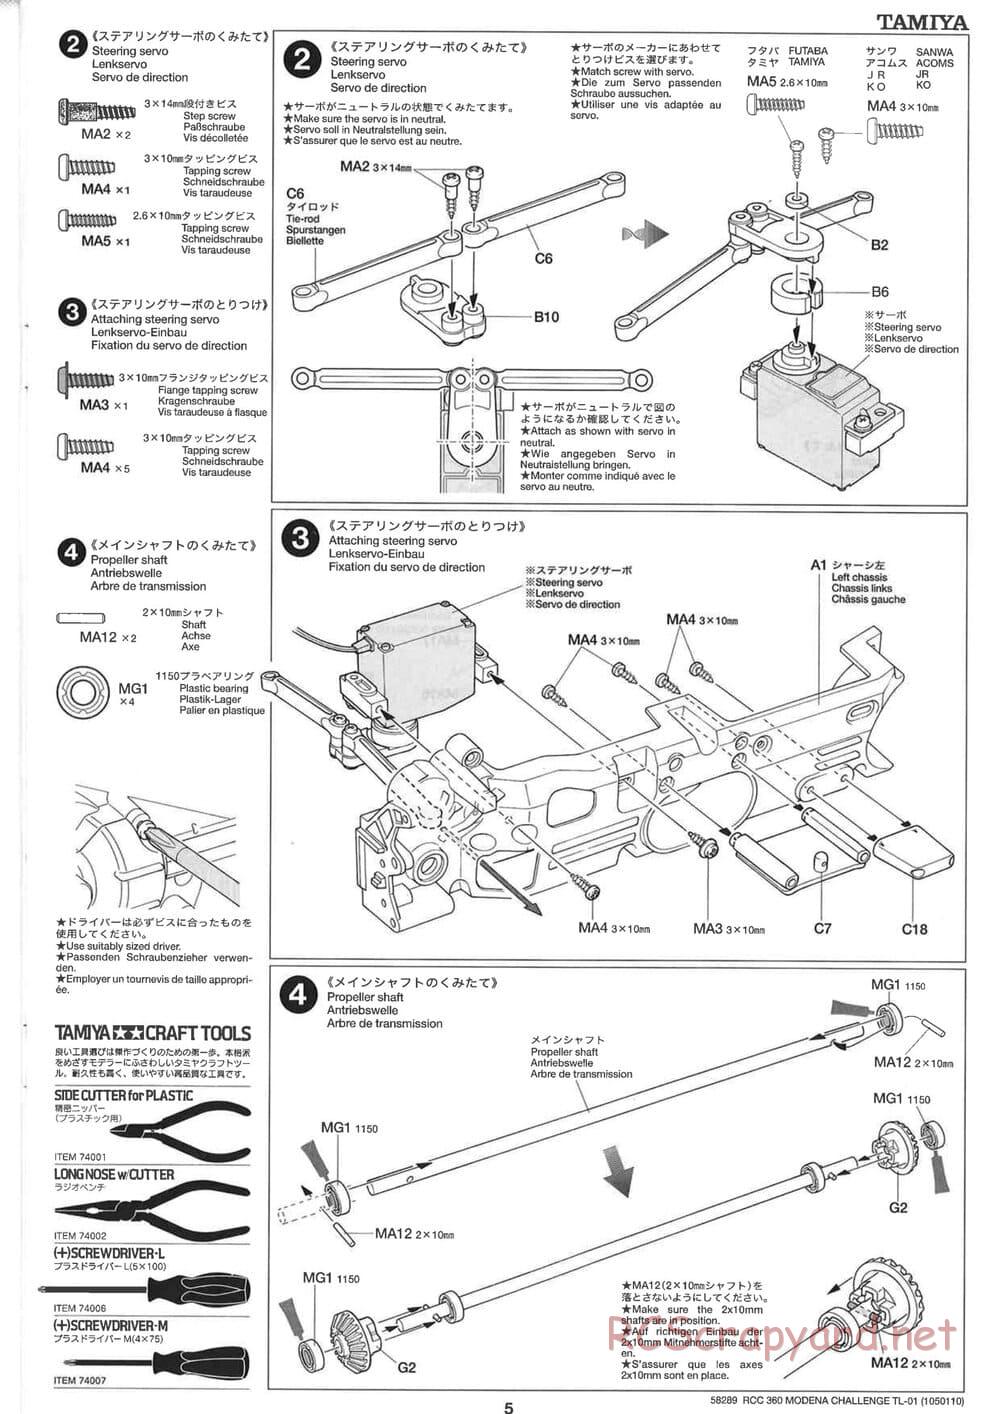 Tamiya - Ferrari 360 Modena Challenge - TL-01 Chassis - Manual - Page 5